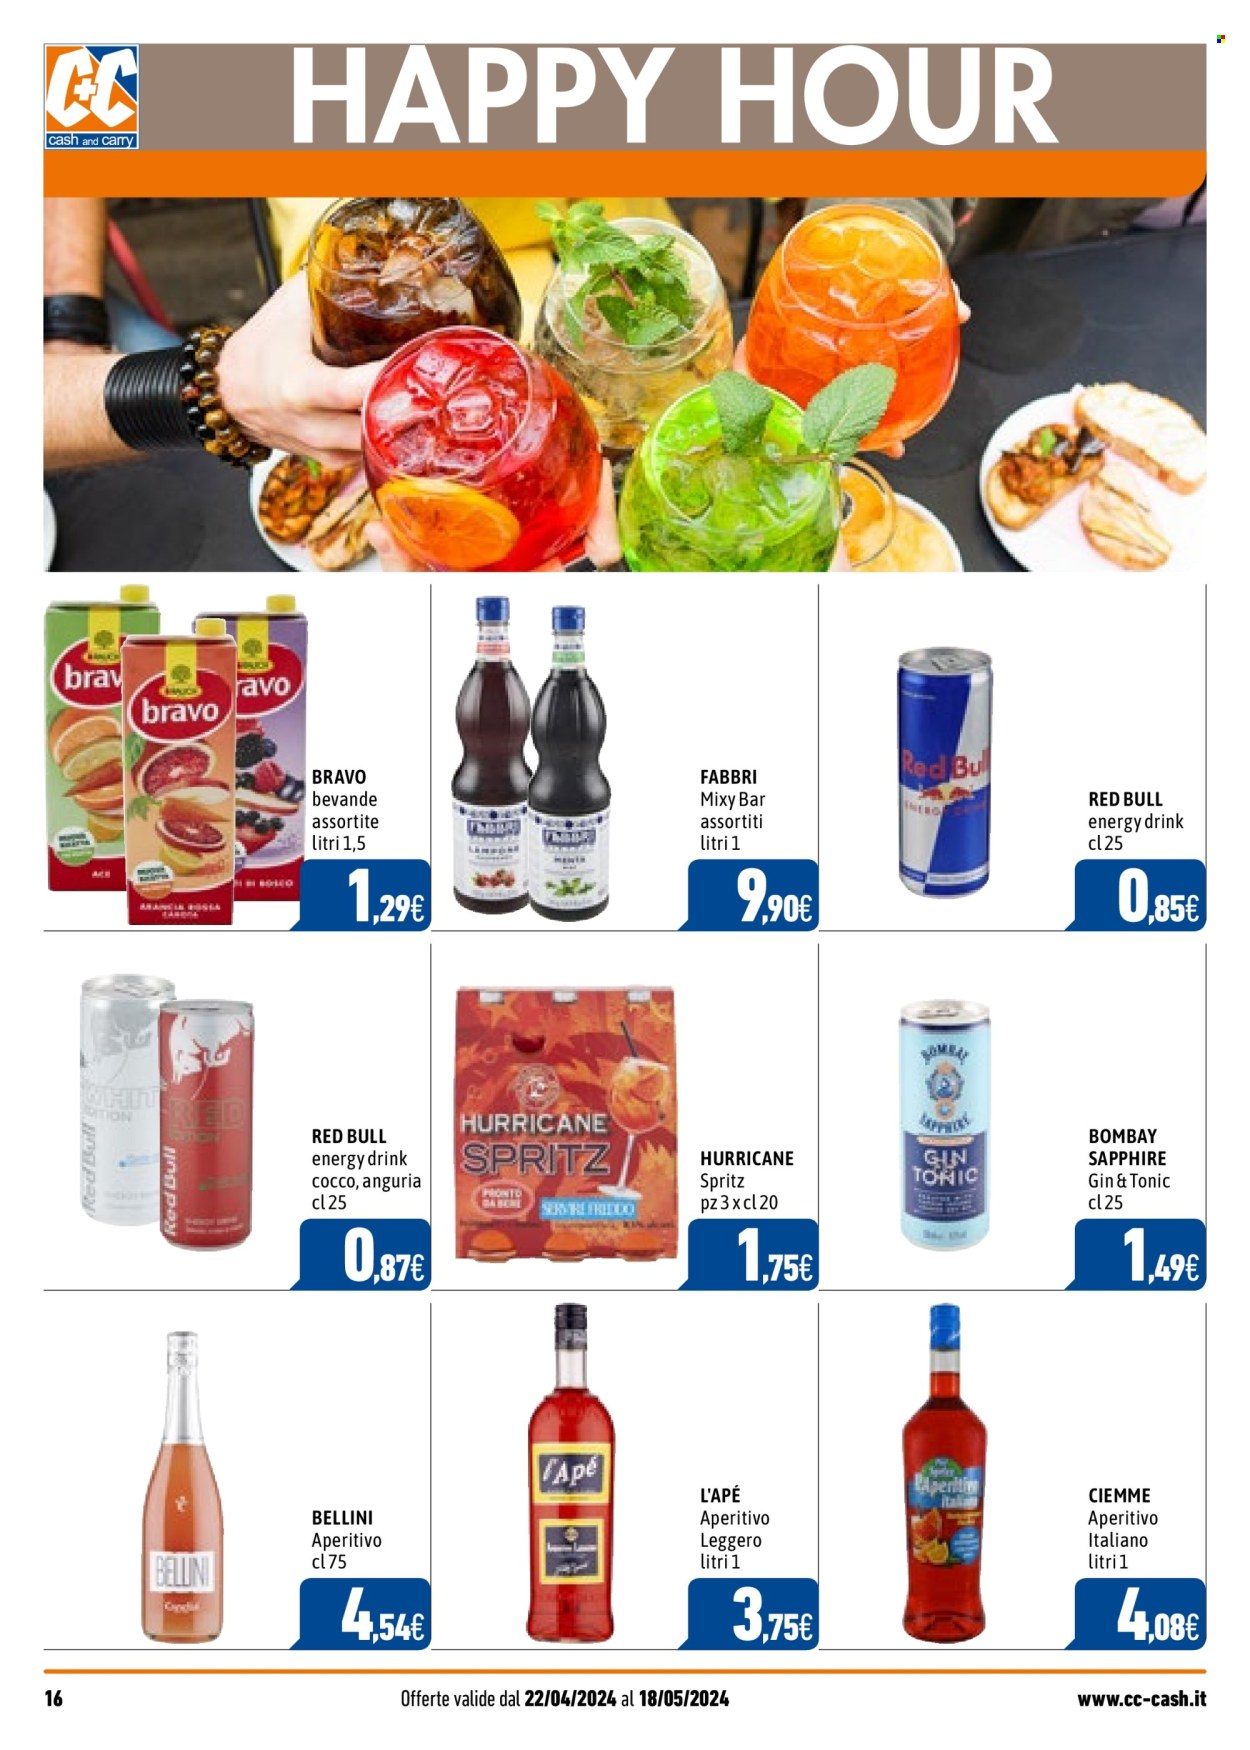 thumbnail - Volantino C+C Cash & Carry - 22/4/2024 - 18/5/2024 - Prodotti in offerta - anguria, cocco, Fabbri, energy drink, Red Bull, gin, Bombay Sapphire, aperitivo. Pagina 16.